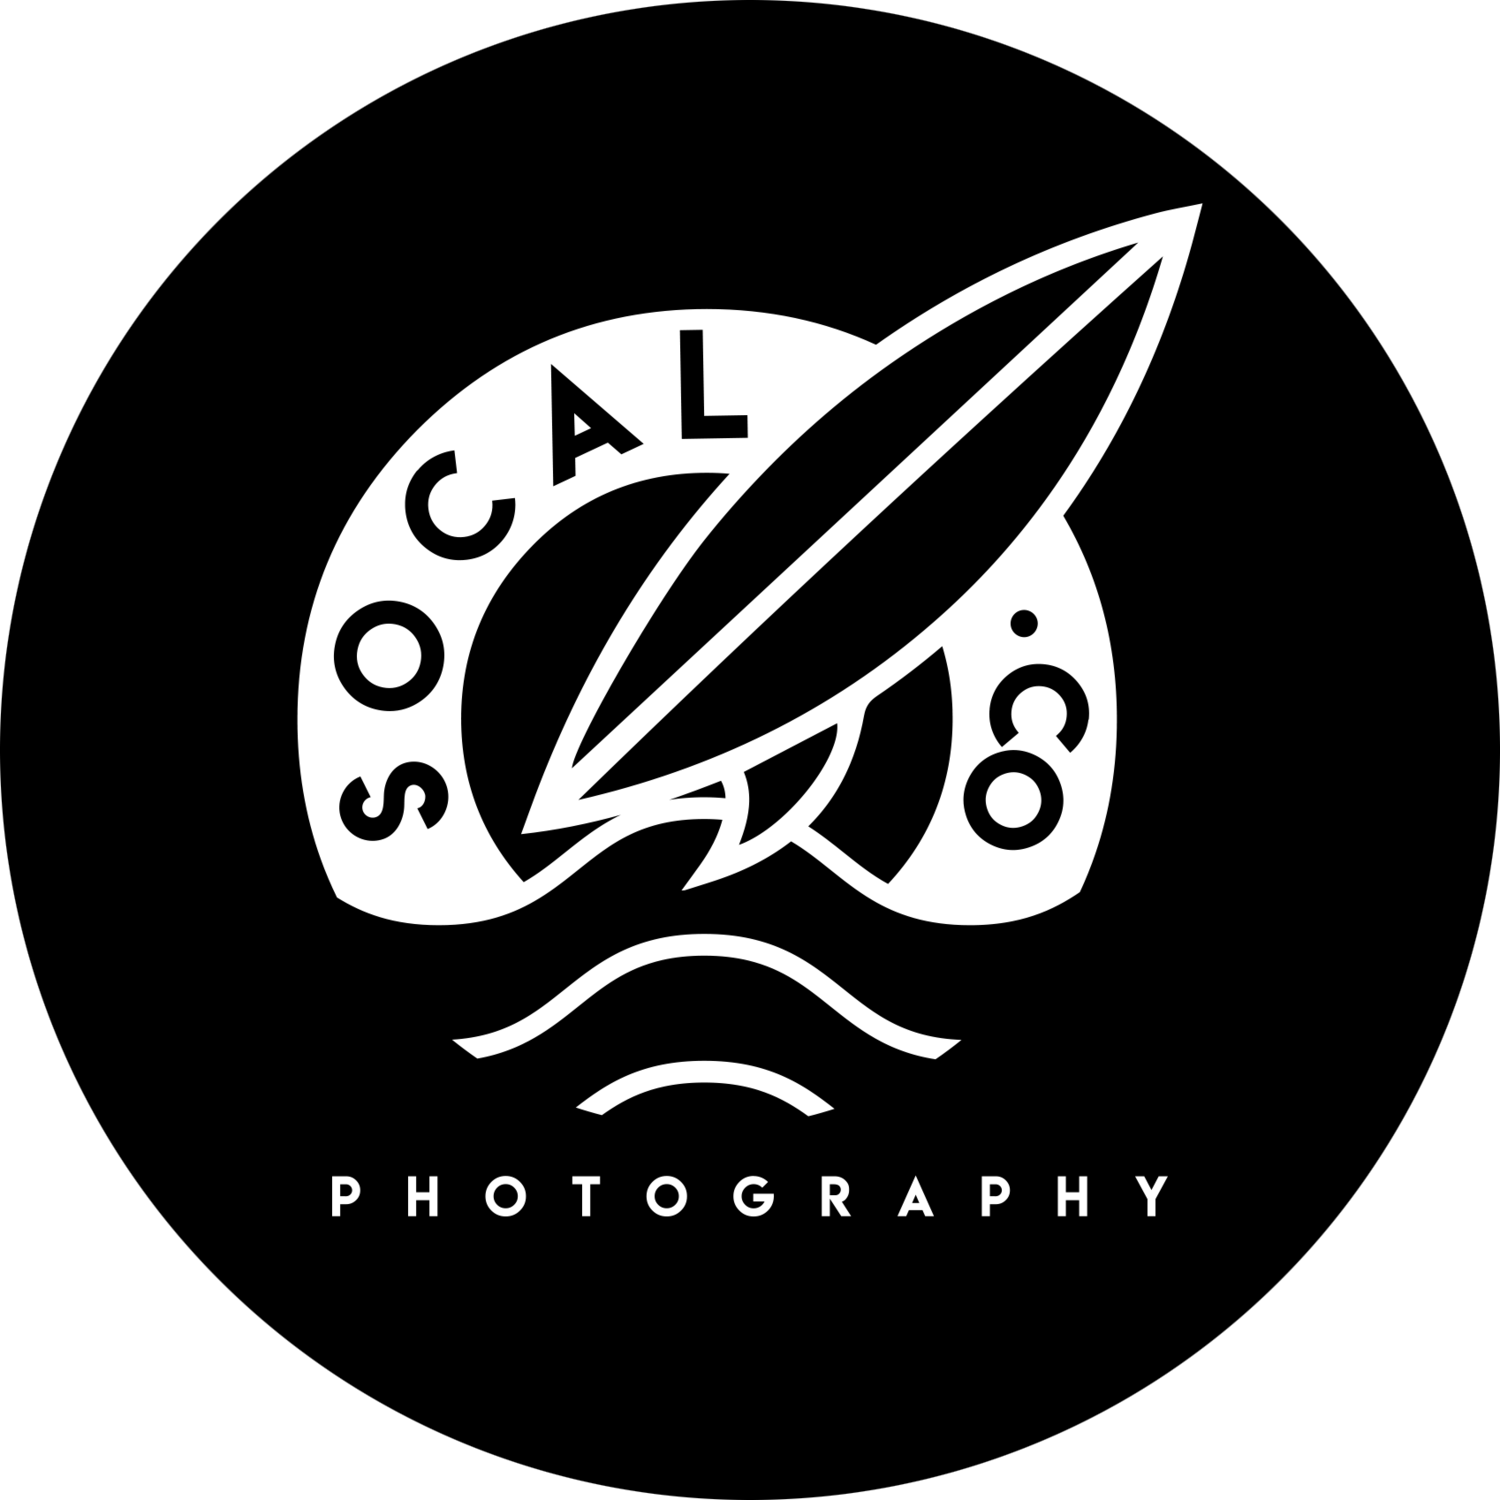 SoCal Photography